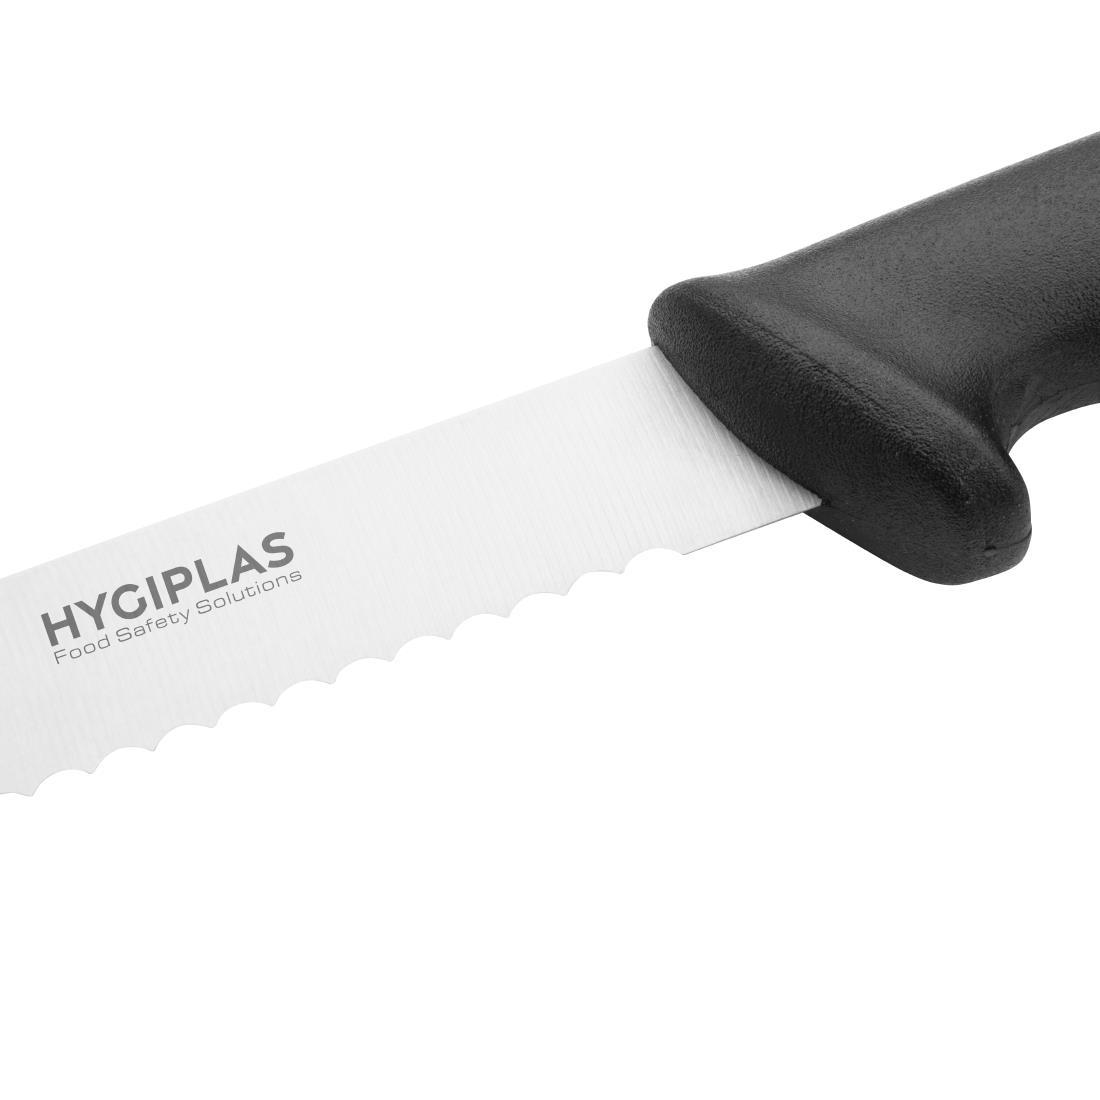 Hygiplas Bread Knife 20.5cm - D734  - 3